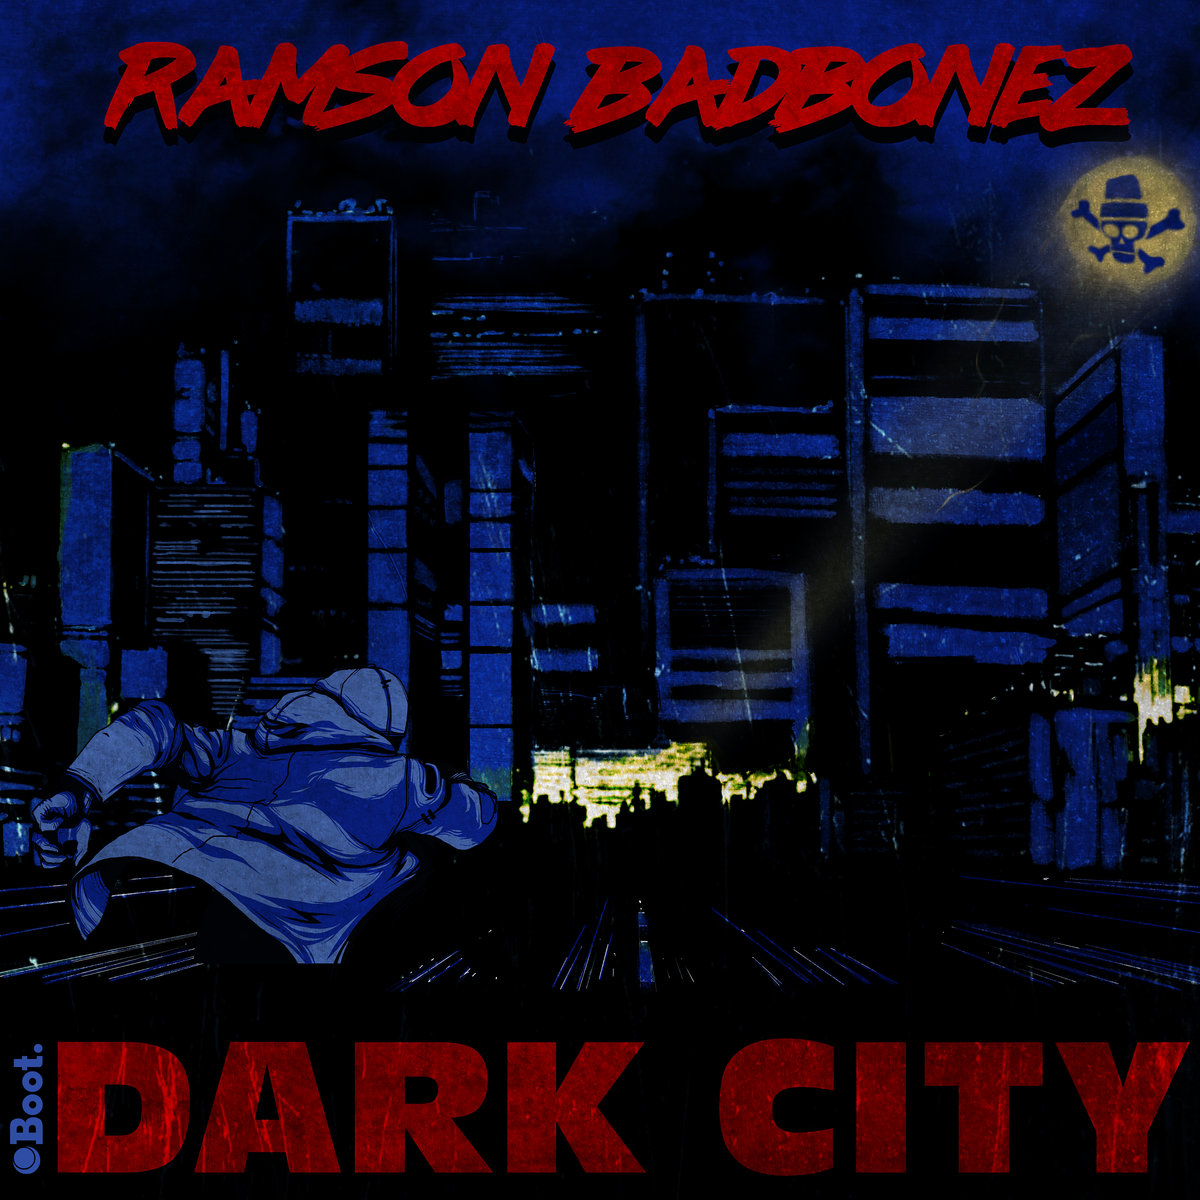 Dark_city_ramsom_badbonez